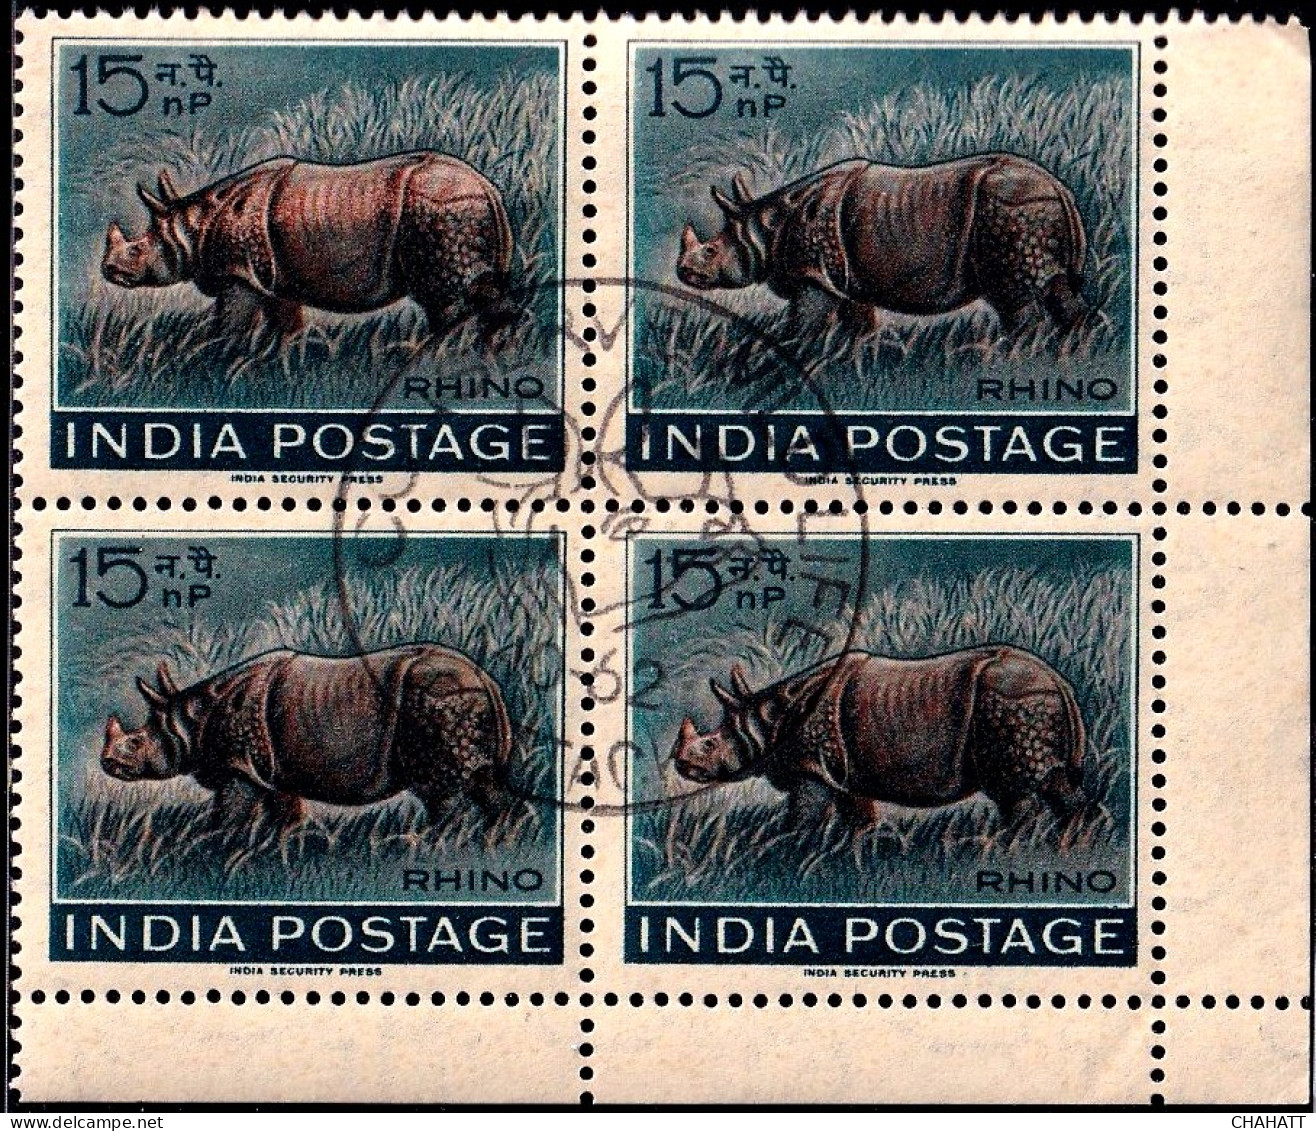 INDIA-1962- WILDLIFE WEEK- RHINOCEROS- BLOCK OF 4 WITH PICTORIAL CANCEL- ERROR-DRY PRINT-"BHARAT" OMITTED-MNH-IE-66-3 - Variedades Y Curiosidades